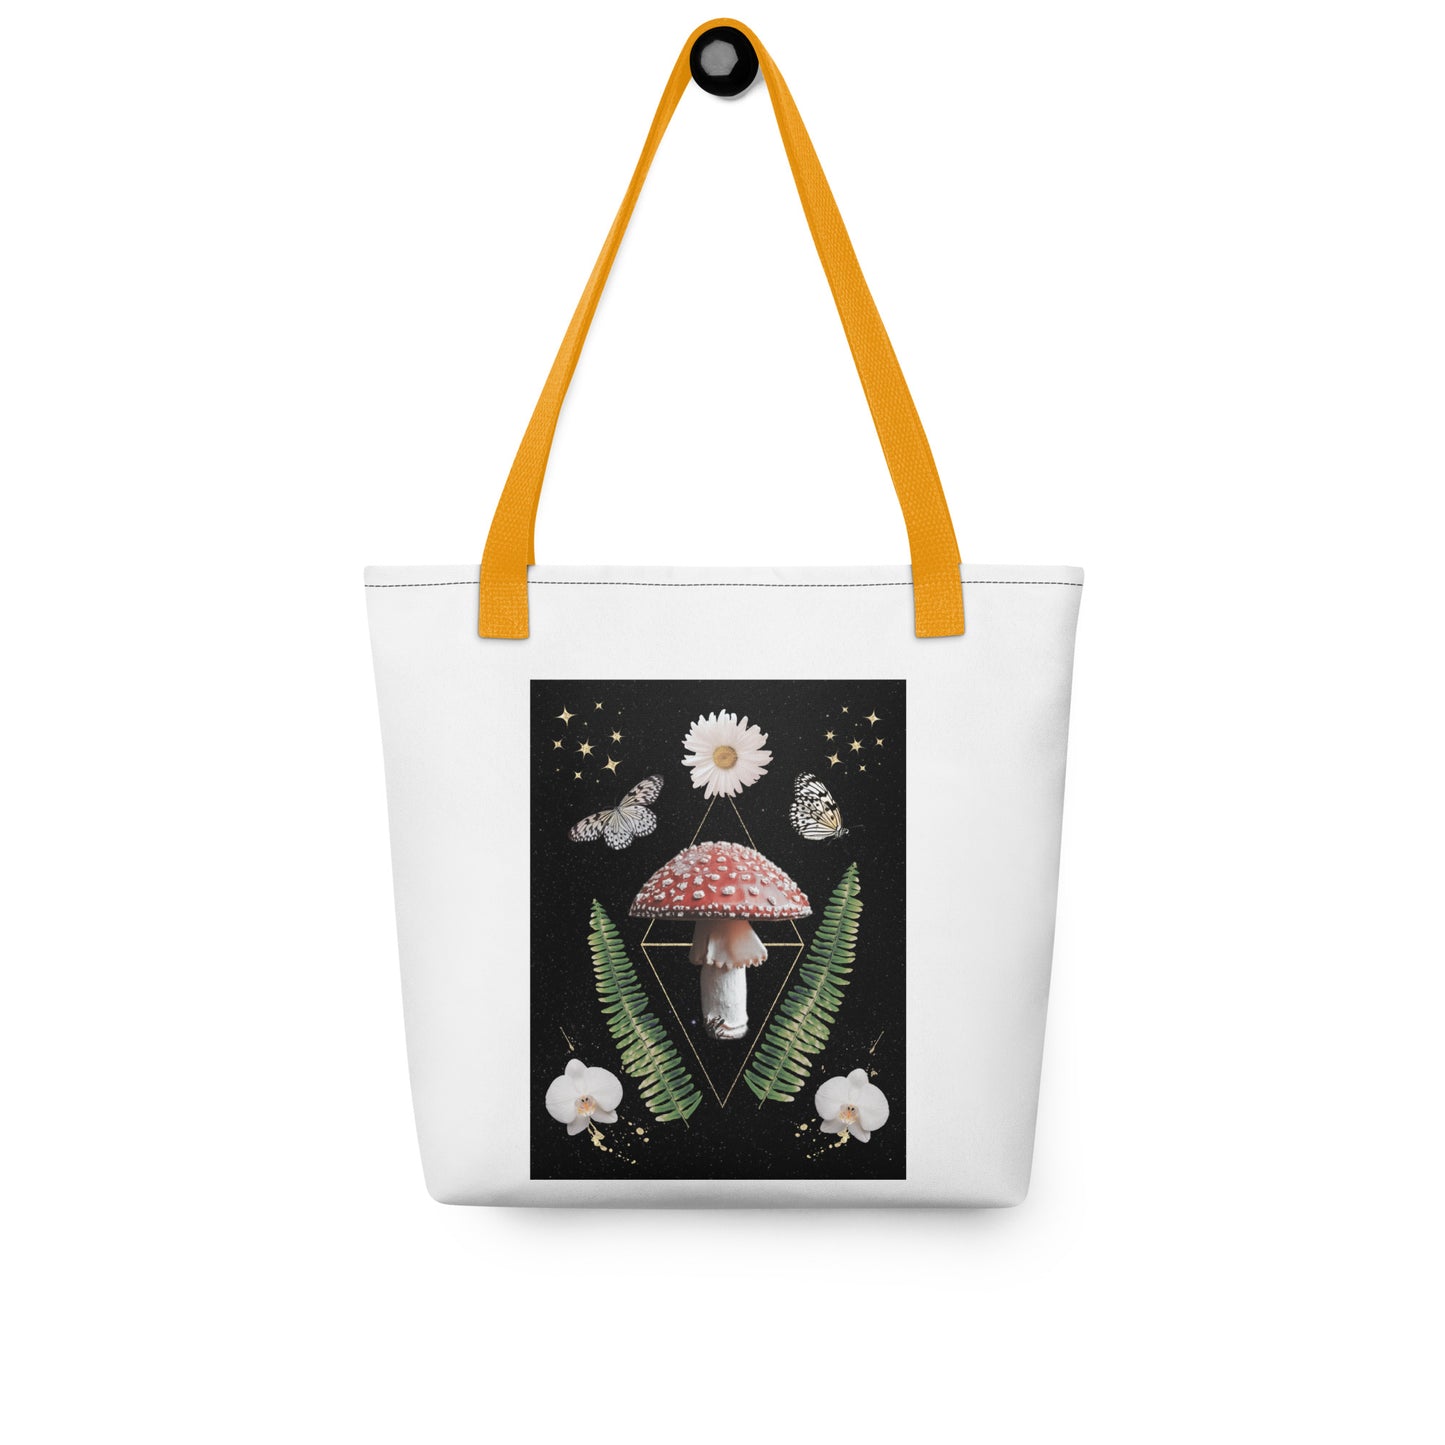 Gorgeous Woodland Mushroom Tote bag